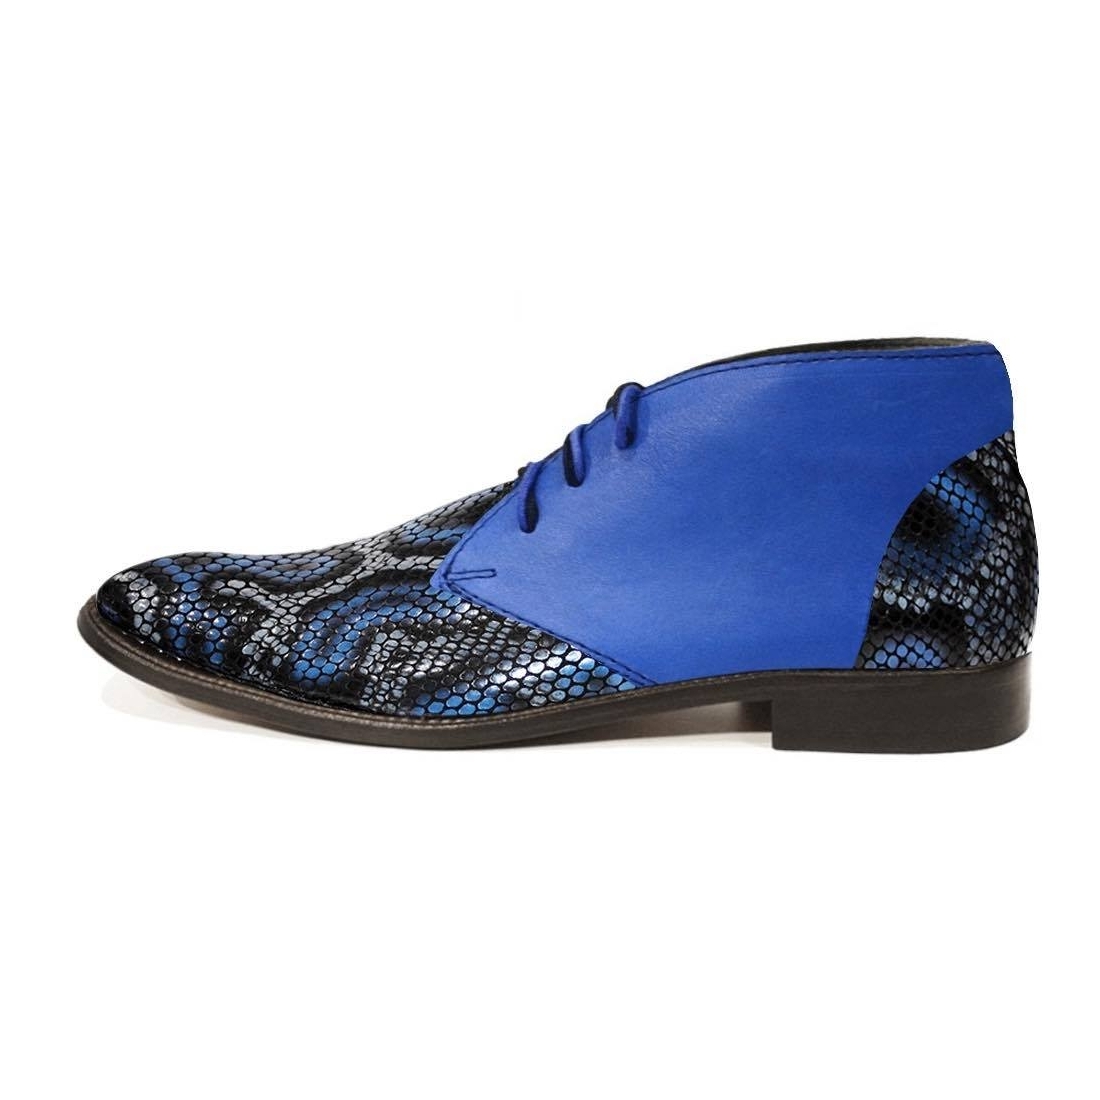 Modello Serpentto - Buty Chukka - Handmade Colorful Italian Leather Shoes